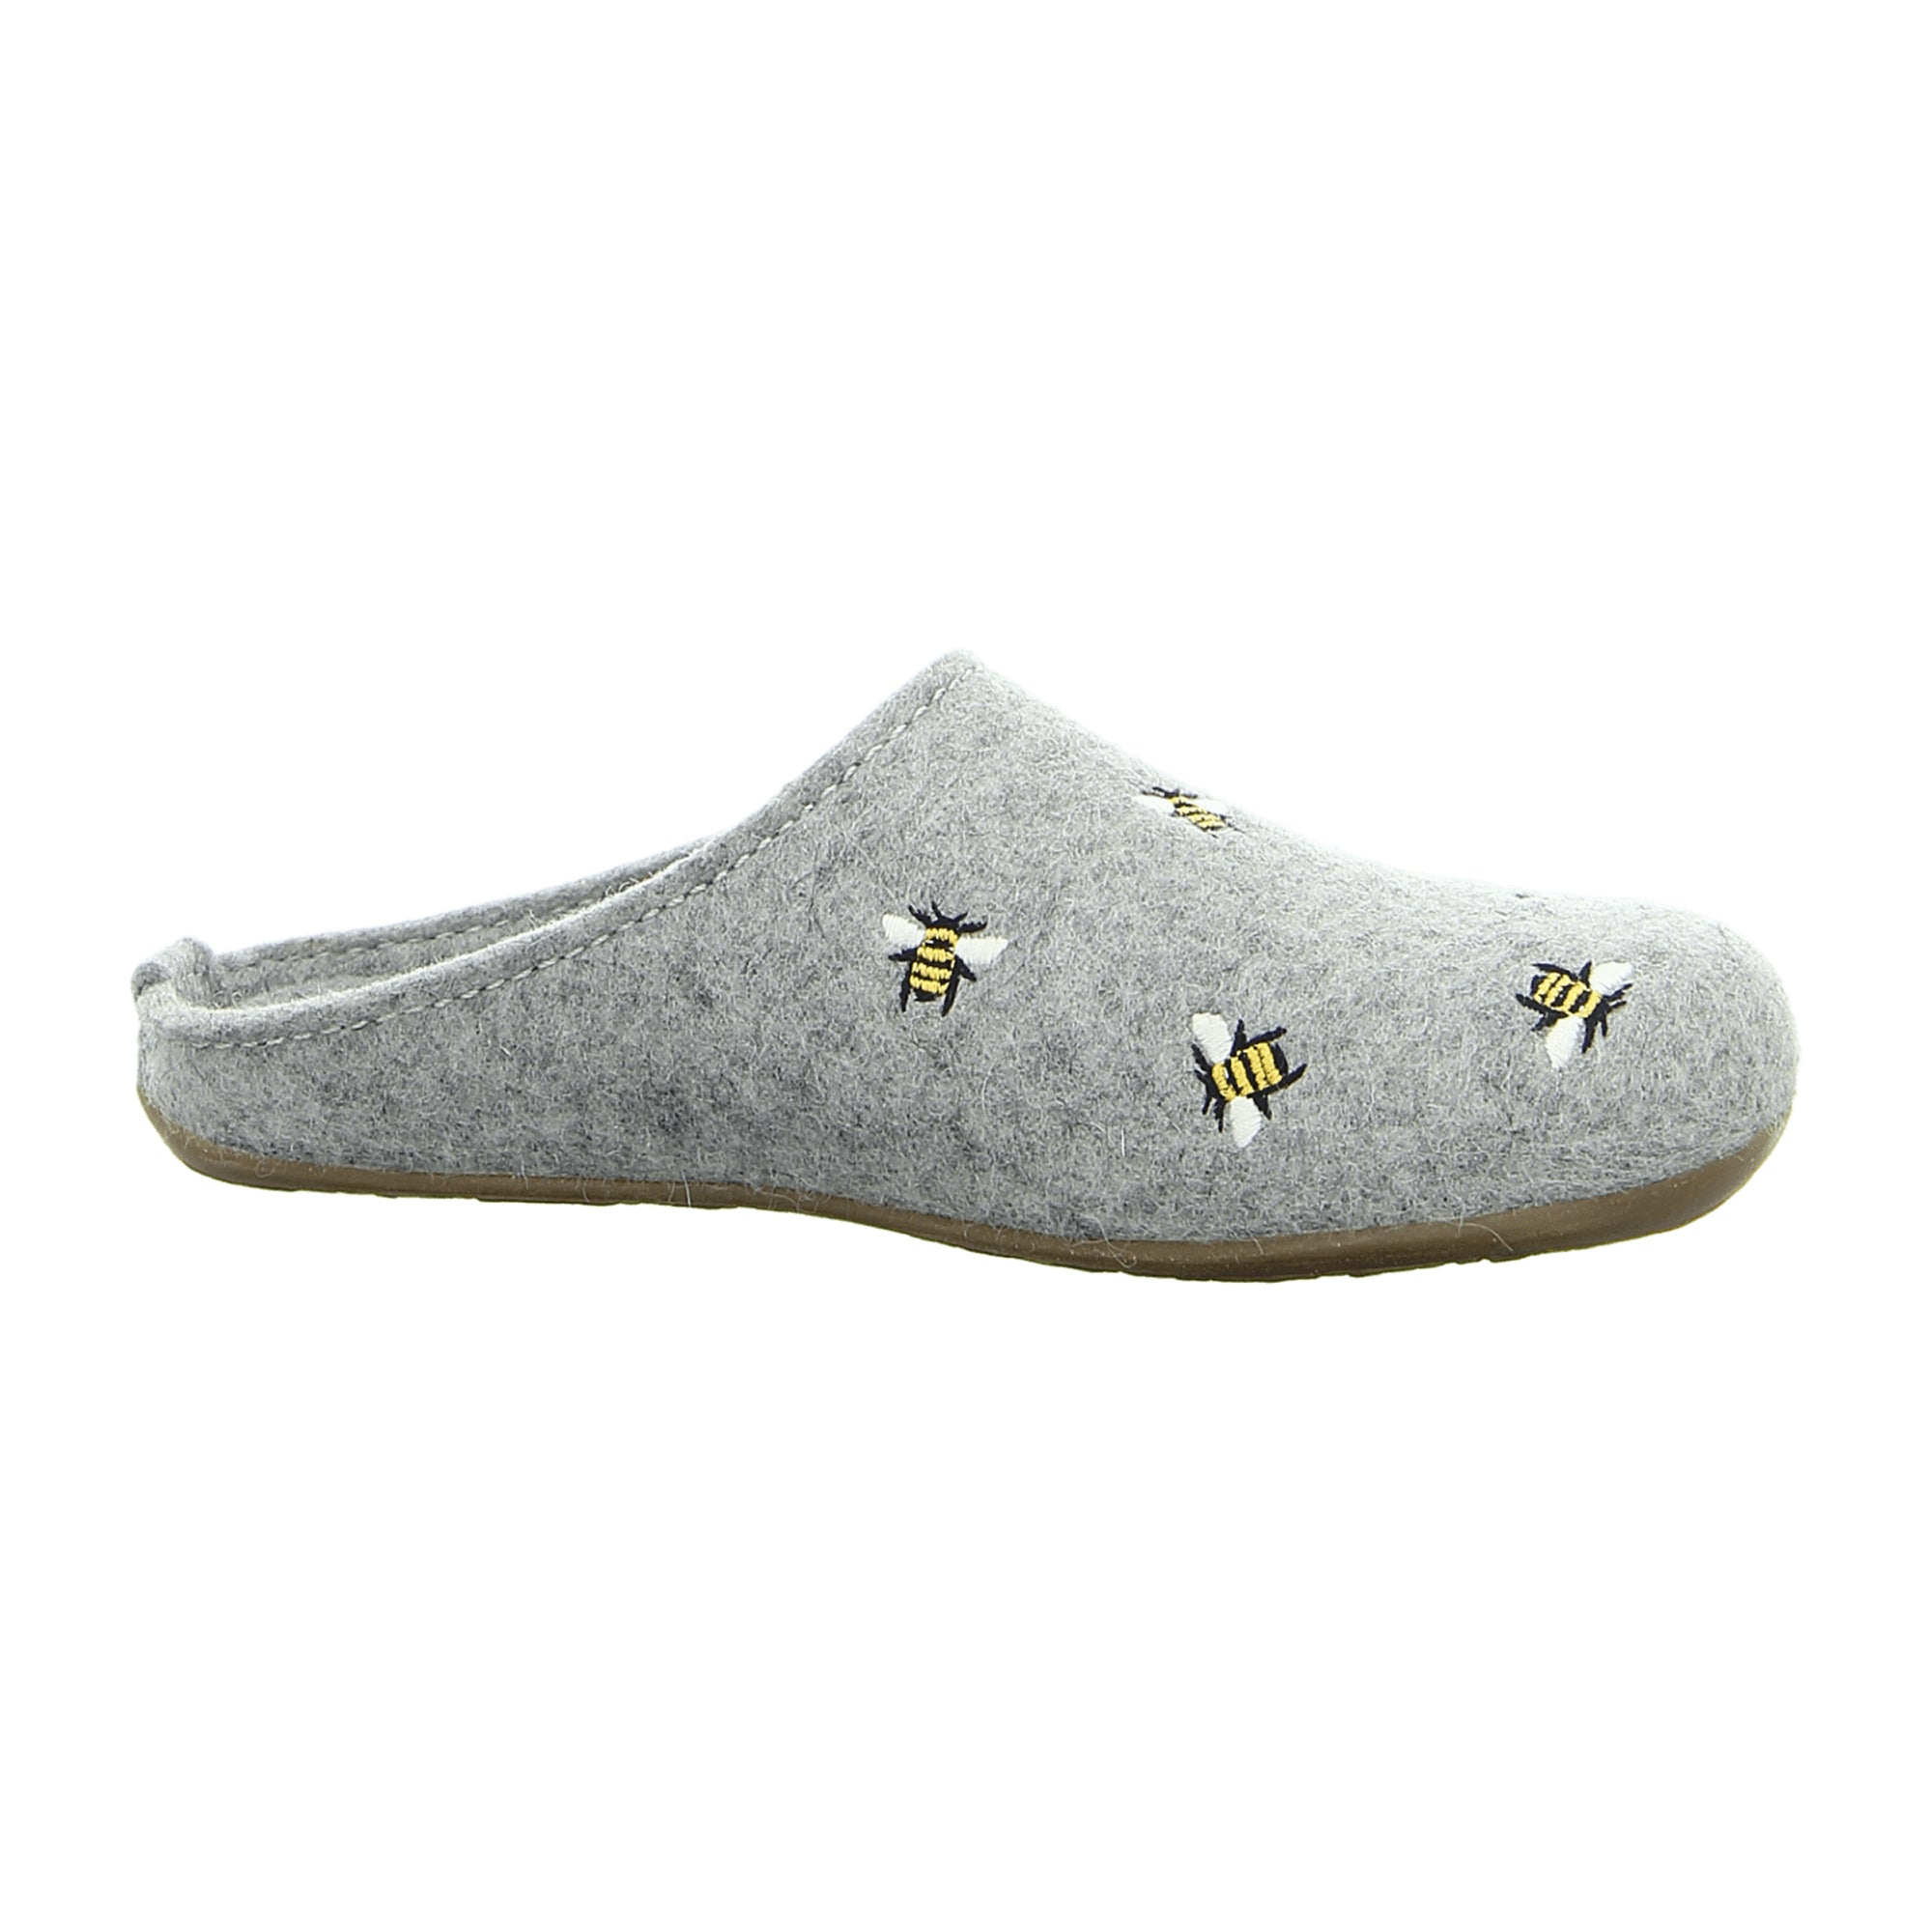 Haflinger Women's Gray Slip-On Clogs | Stylish & Comfortable Footwear